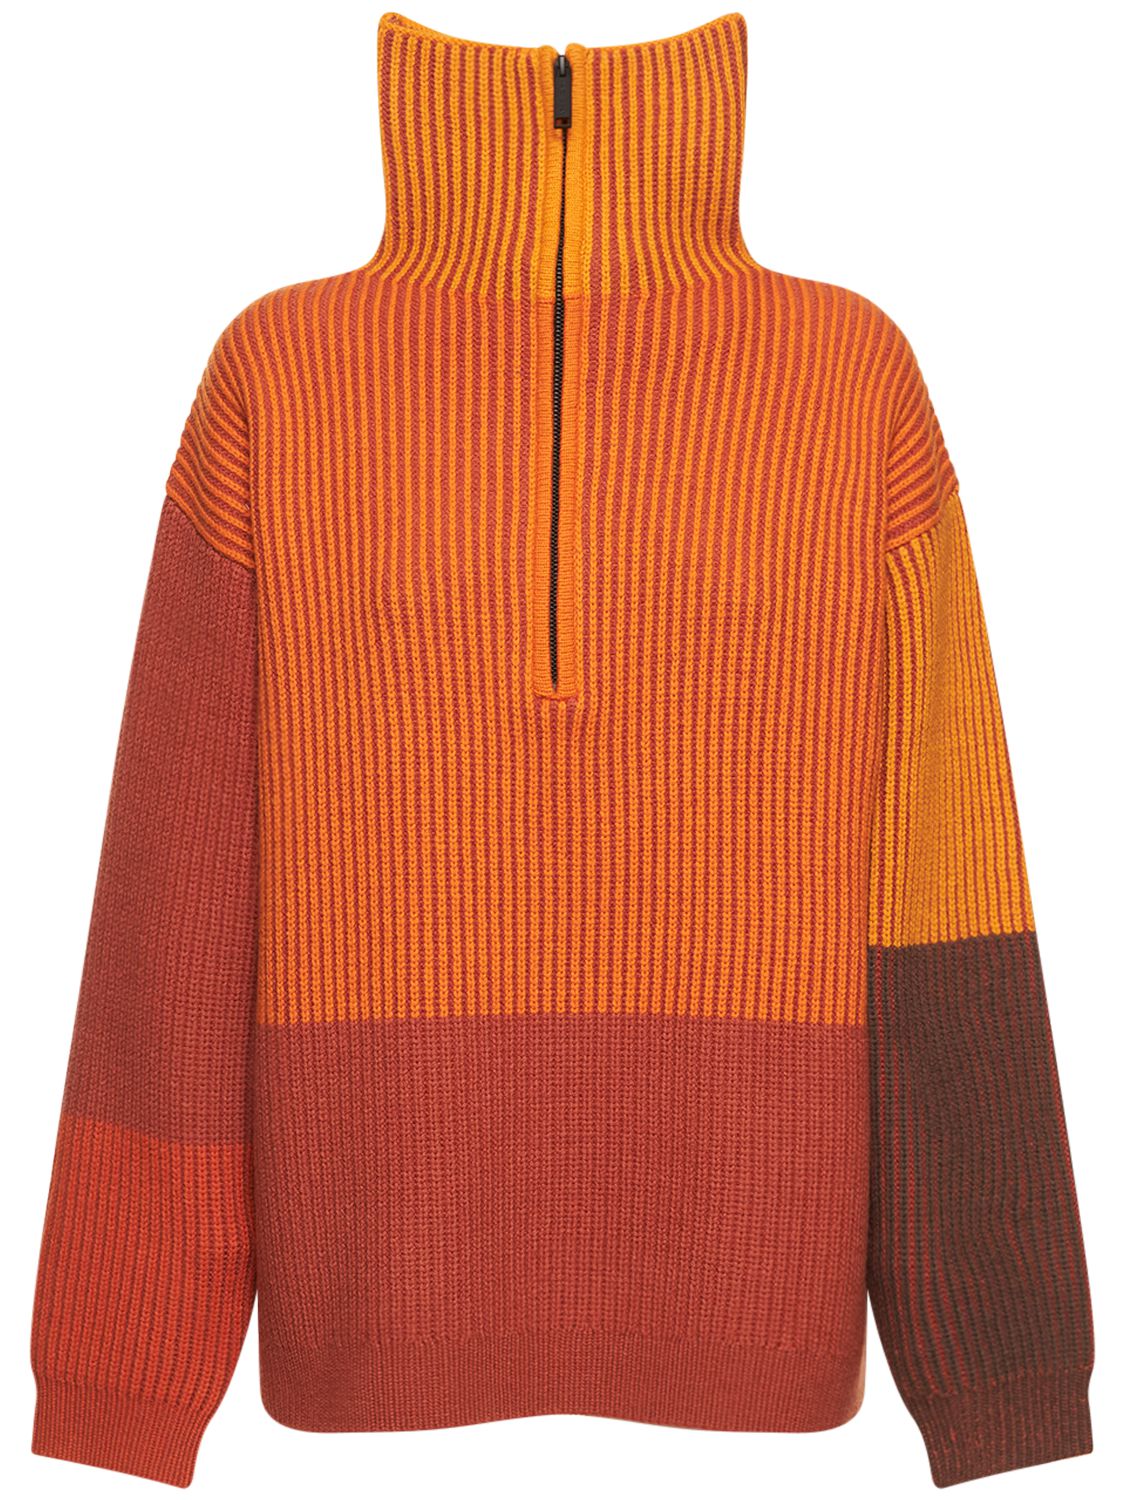 Hinterland Zip Knit Sweater